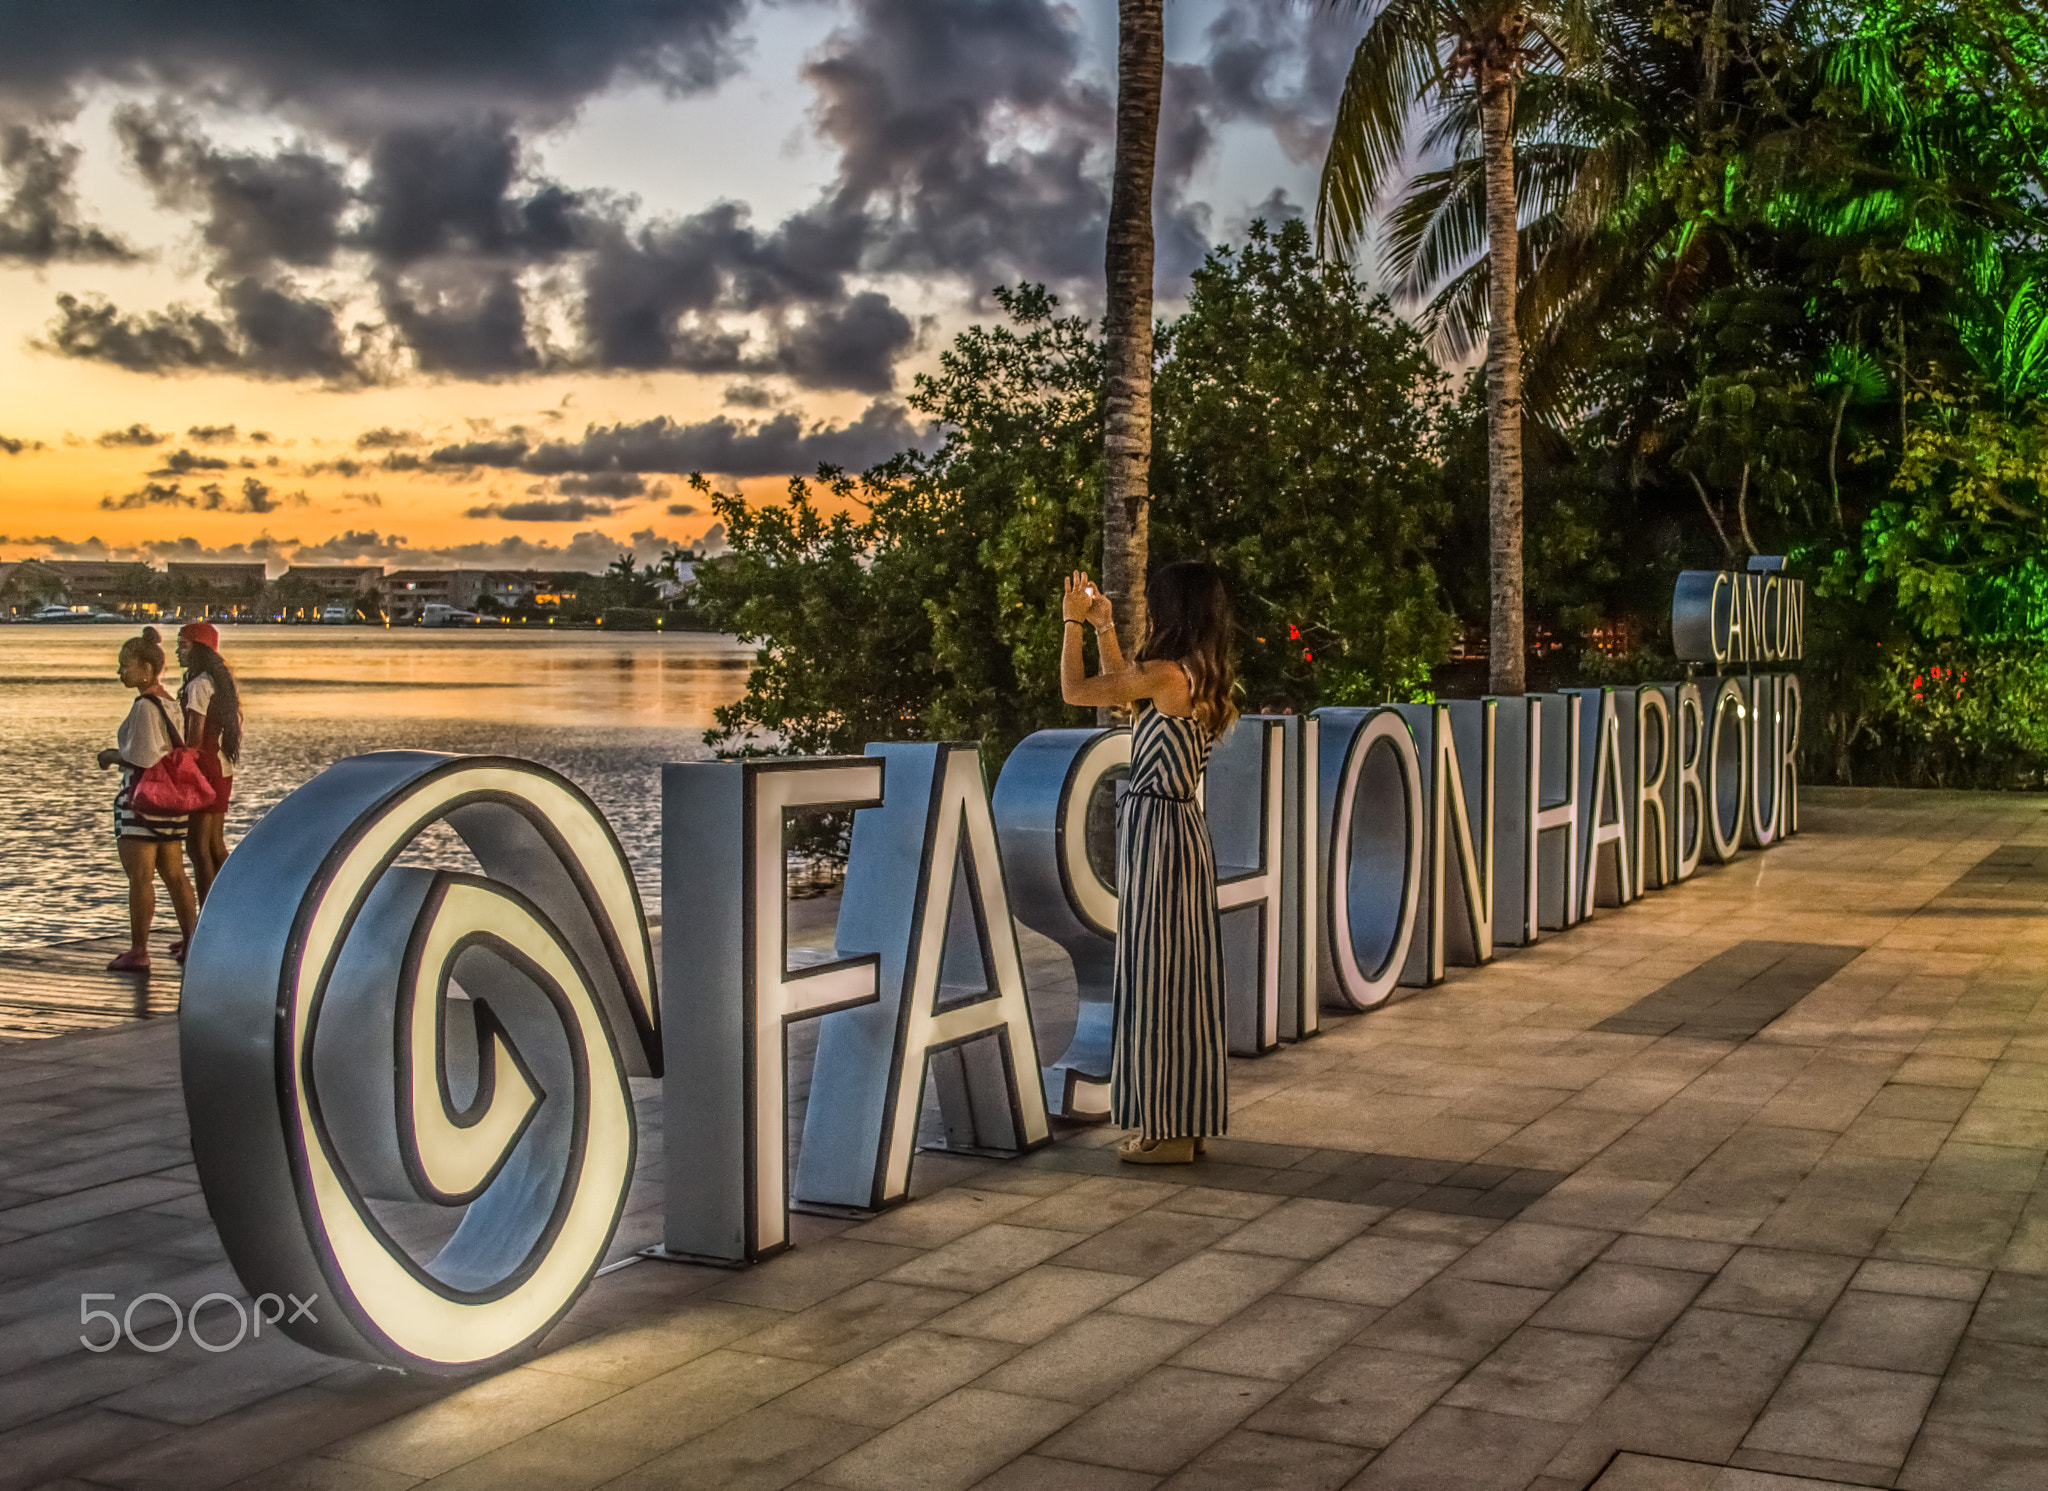 Fashion Harbour - Cancun